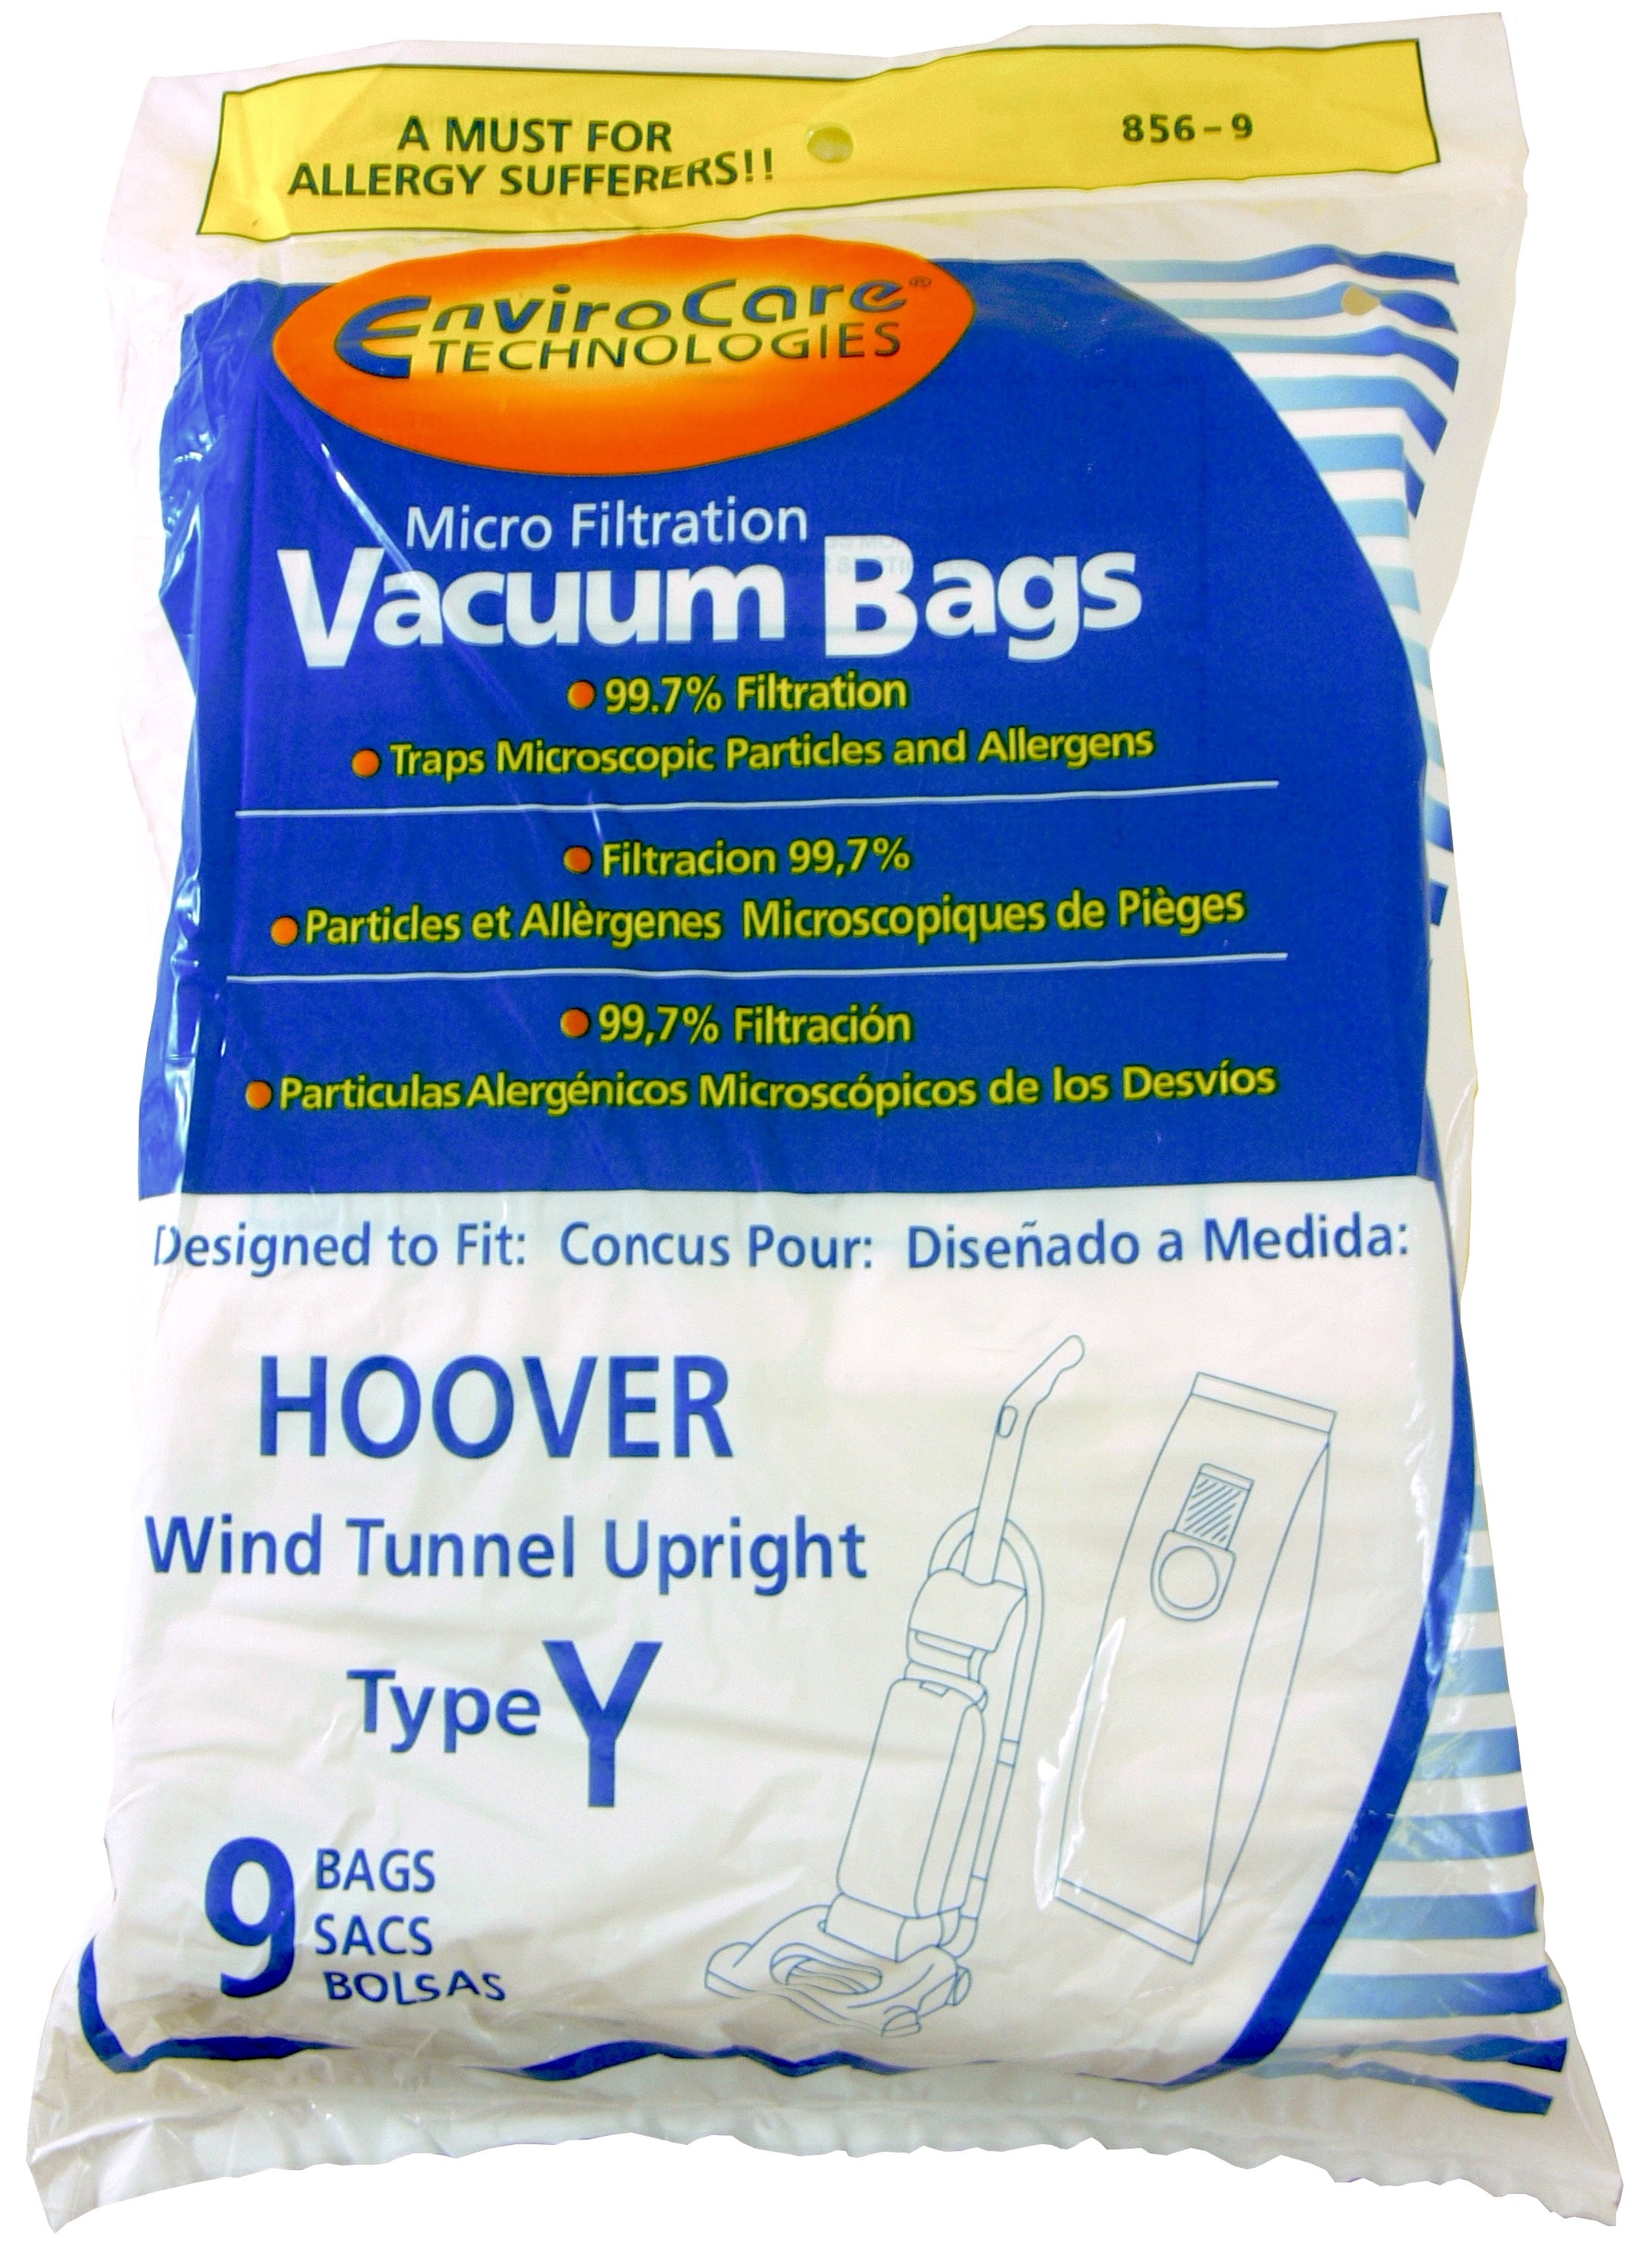 Type Y Windtunnel Upright Vacuum Paper Bags AH10165 3 Hoover 856 4010100Y 